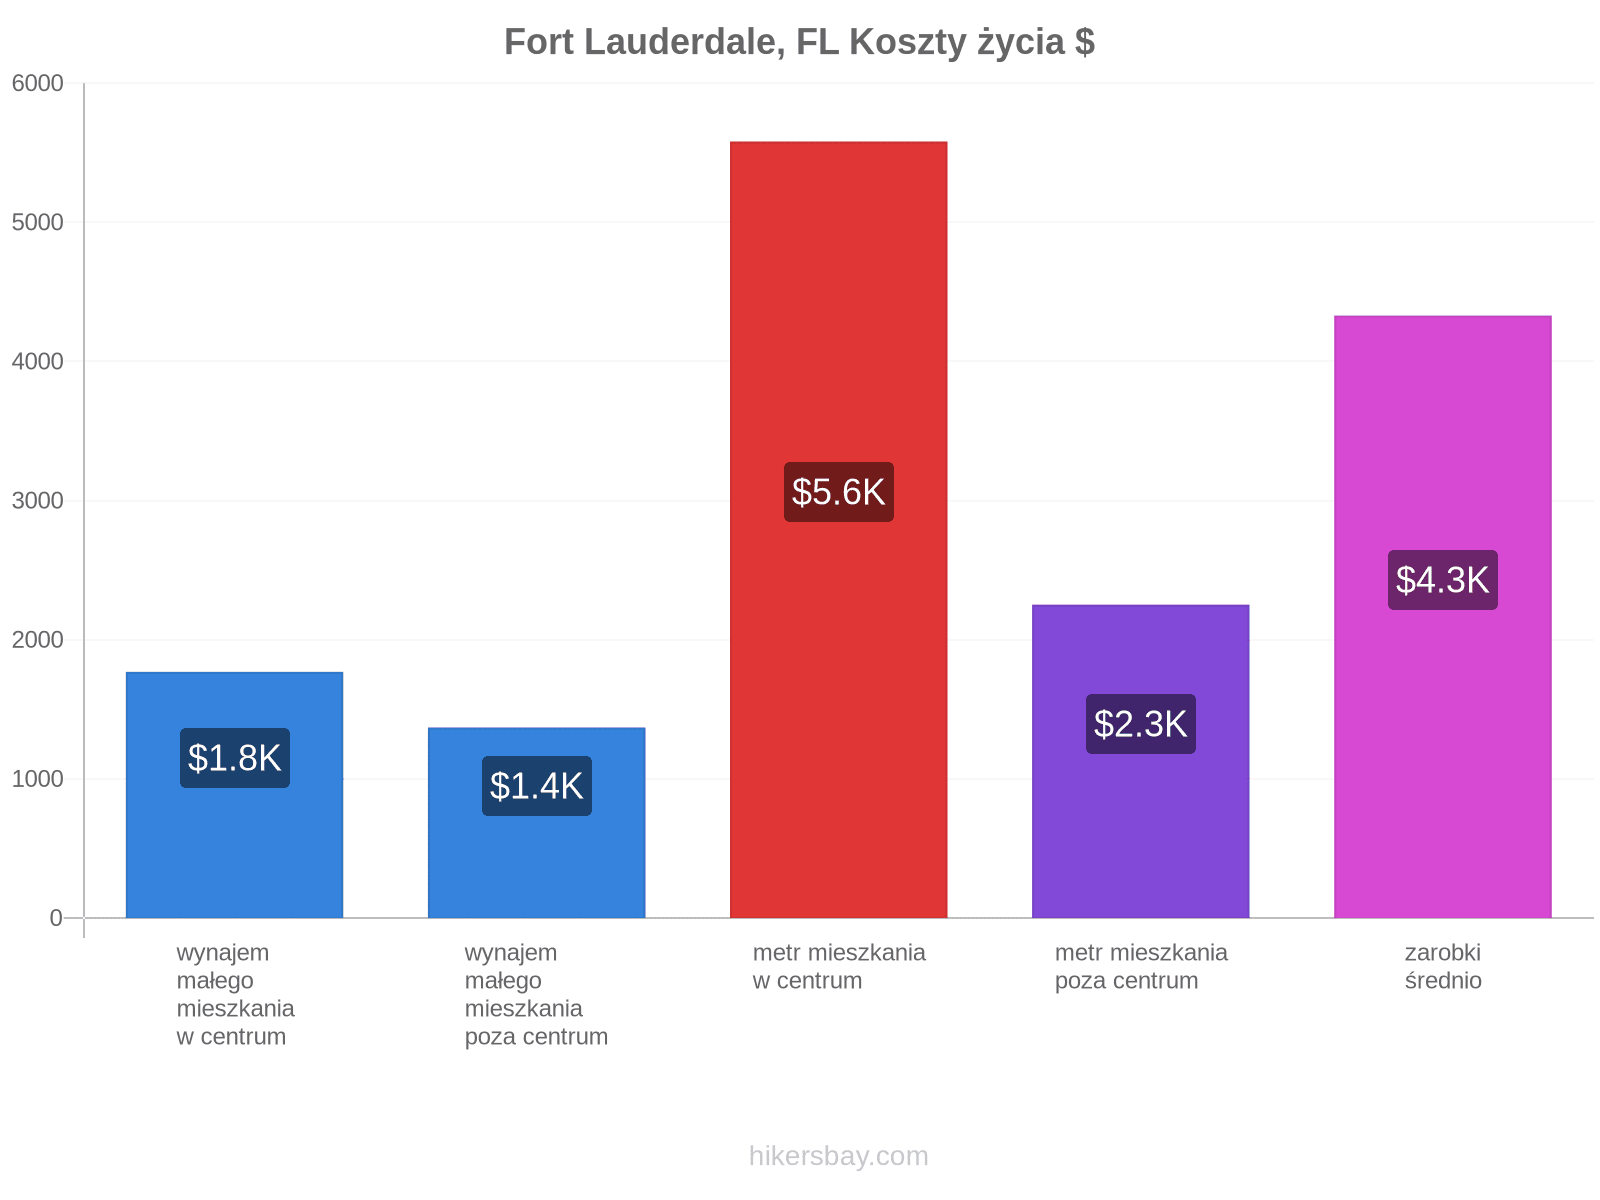 Fort Lauderdale, FL koszty życia hikersbay.com